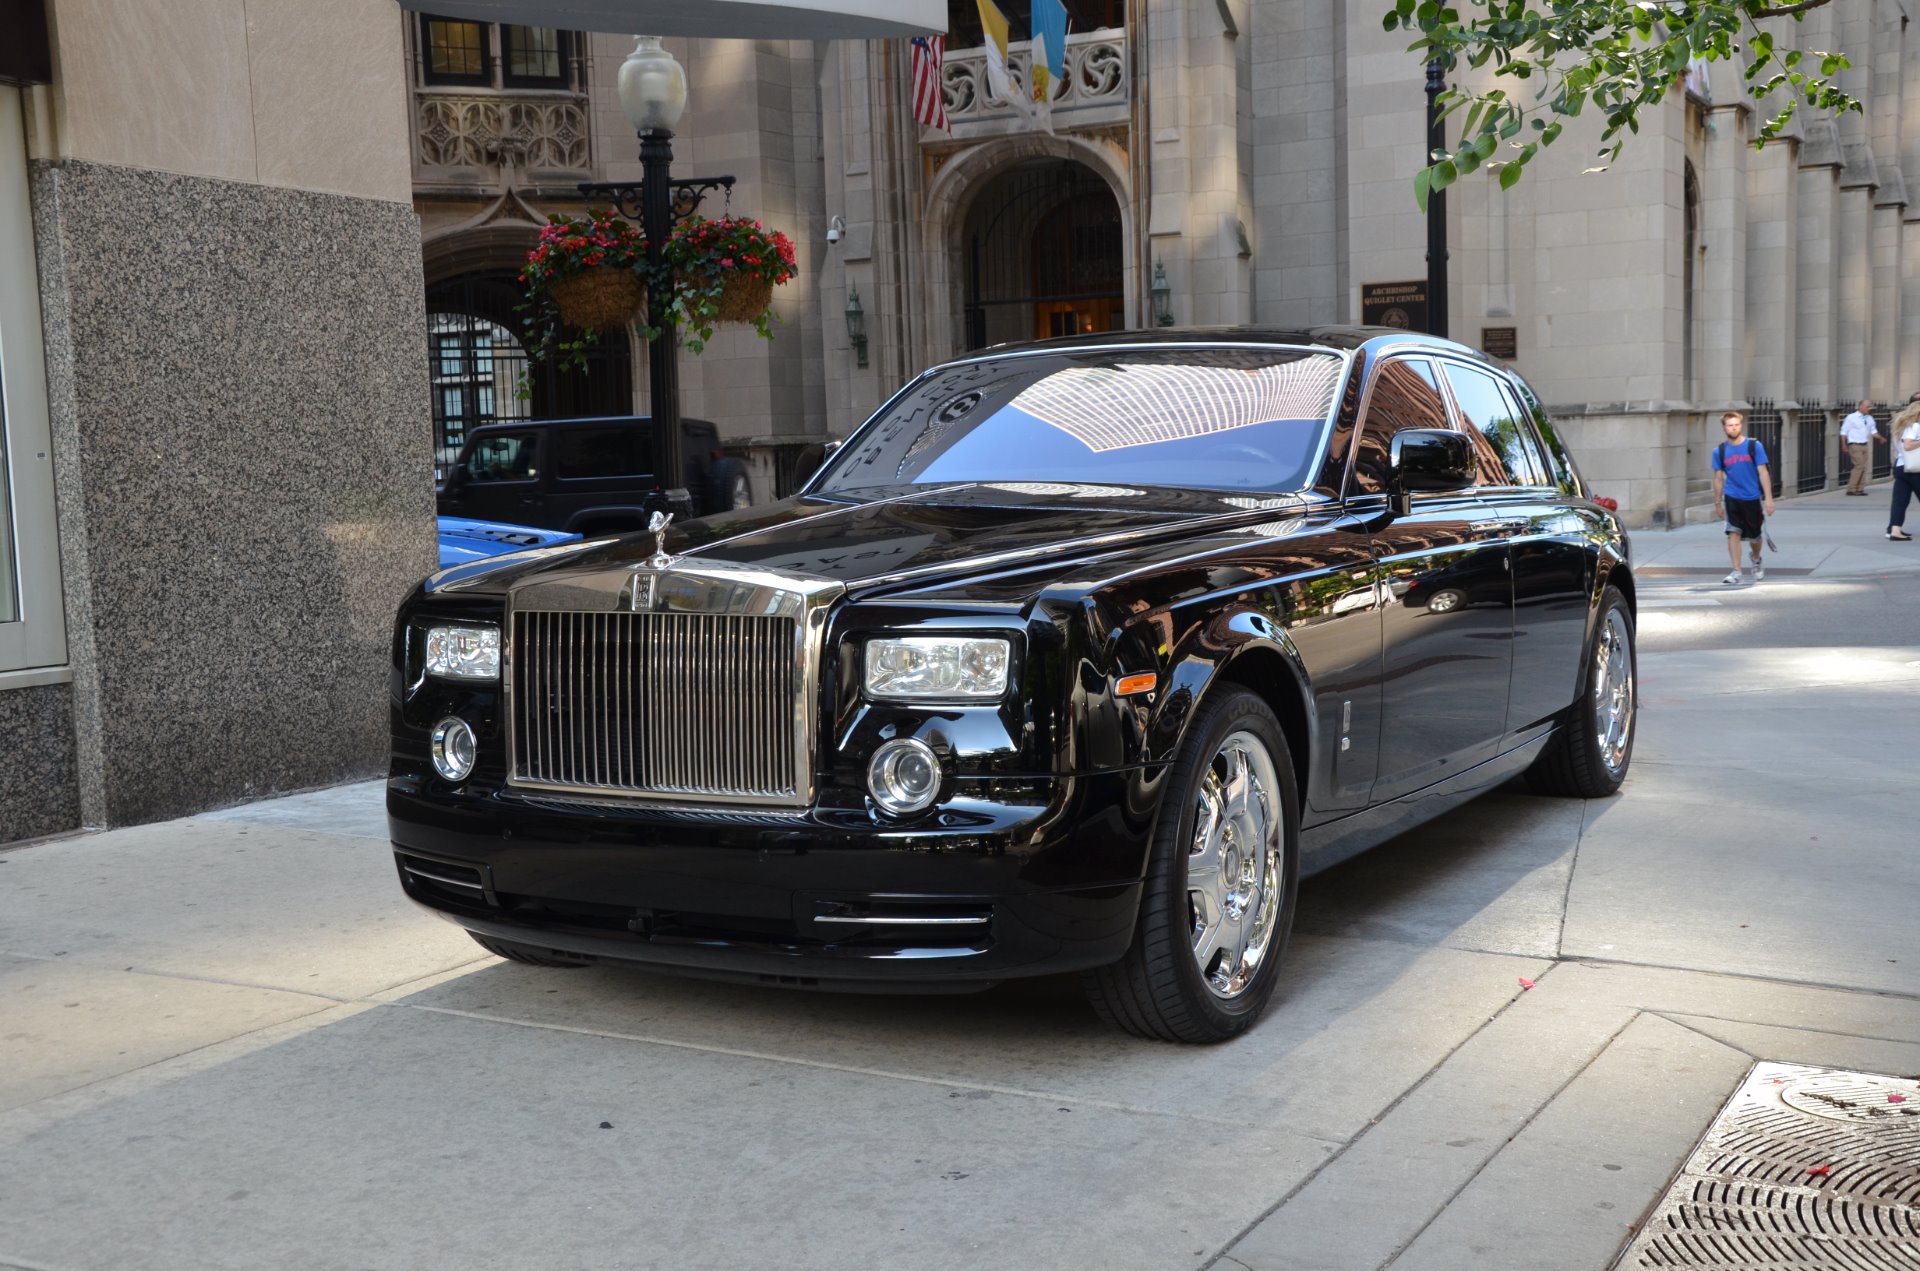 2011 Rolls-Royce Phantom : Latest Prices, Reviews, Specs, Photos